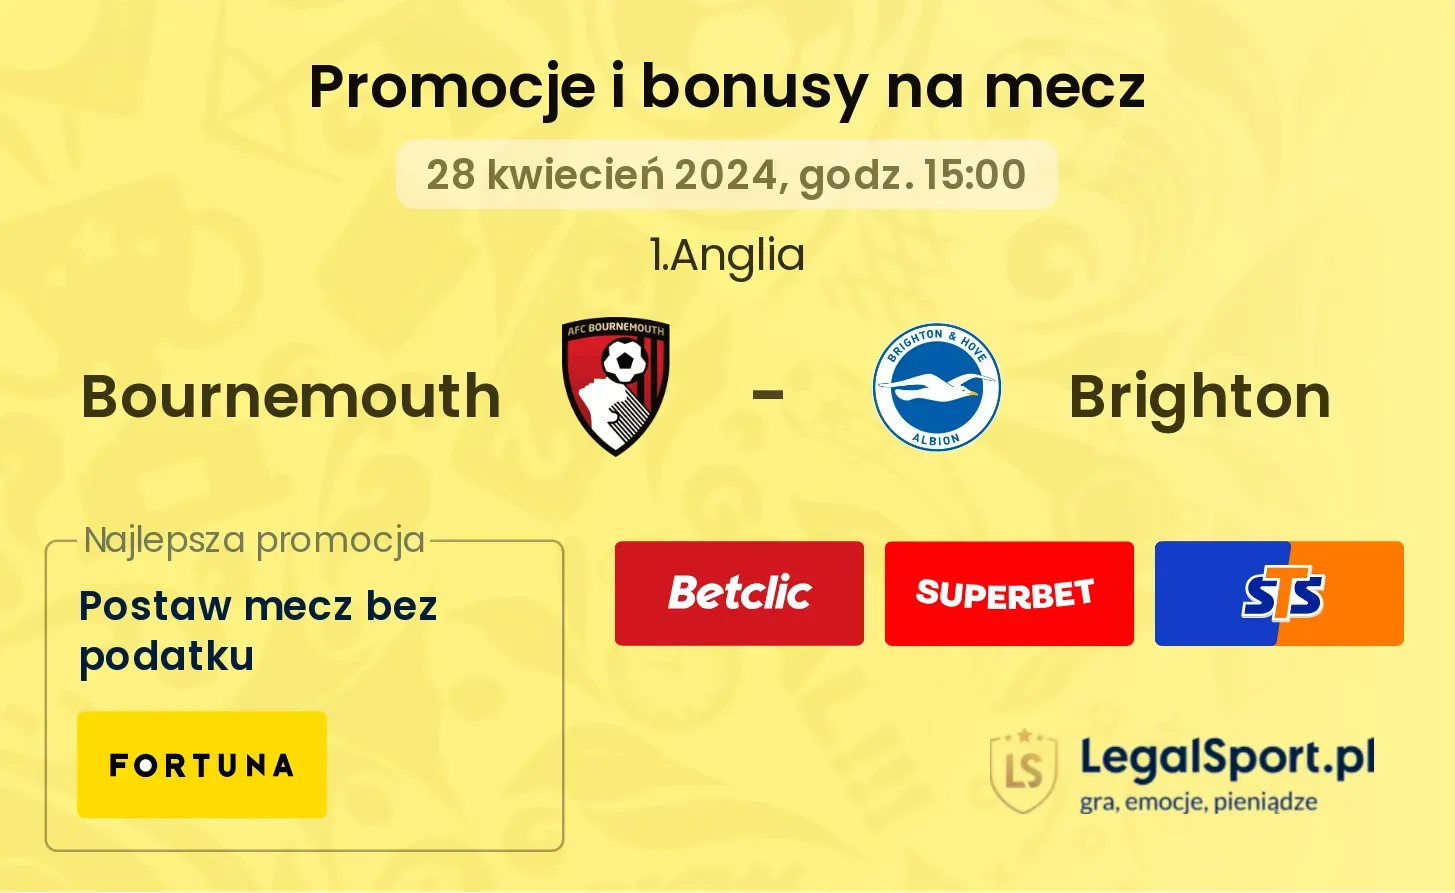 Bournemouth - Brighton promocje bonusy na mecz